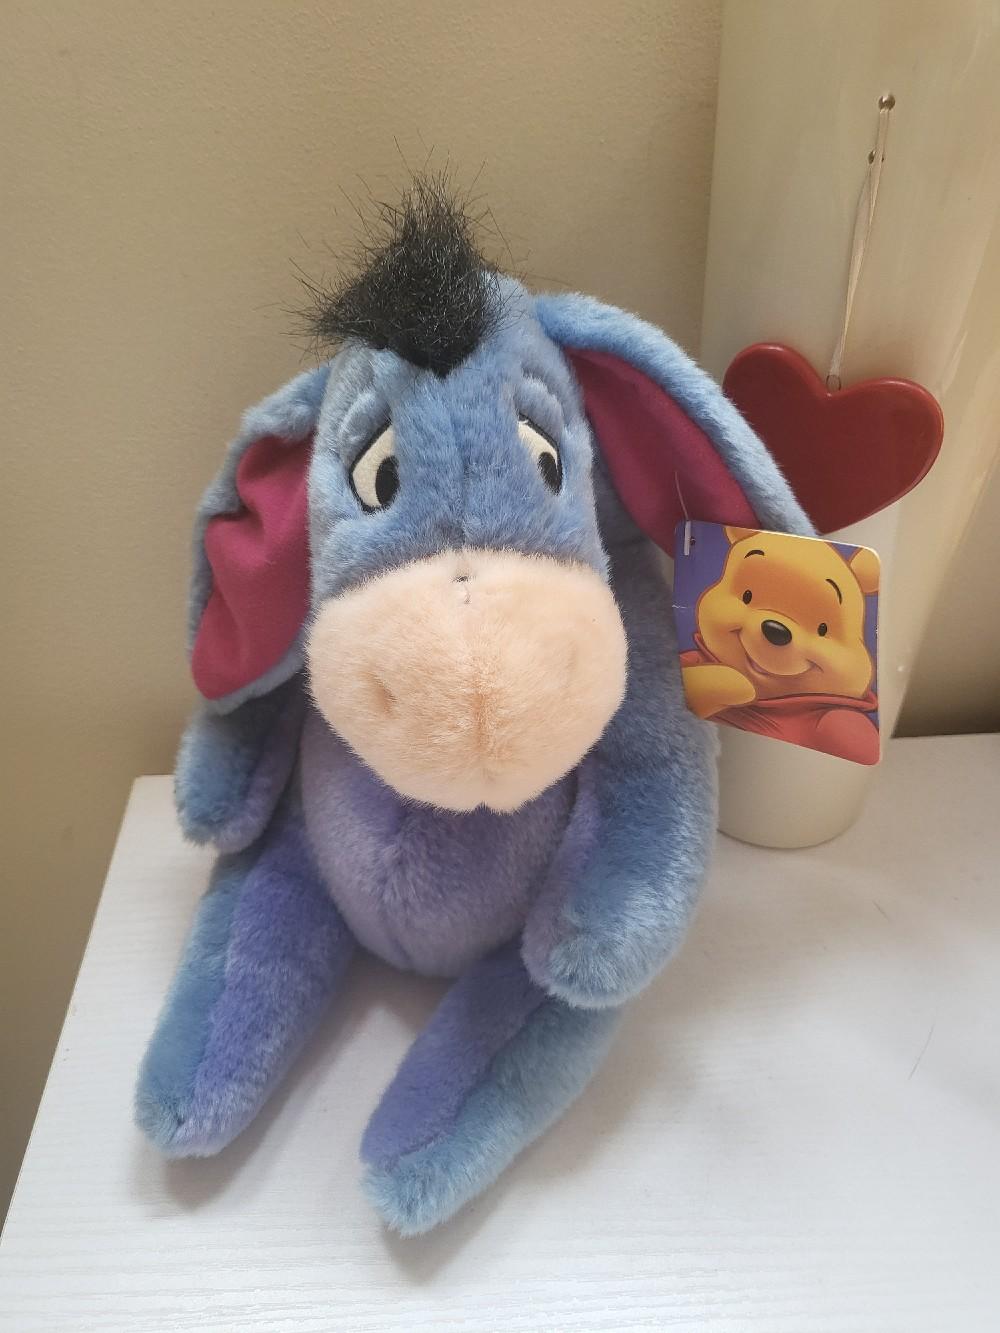 b'Disney EEYORE Soft Plush Toy Approx 10" #1' for sale  